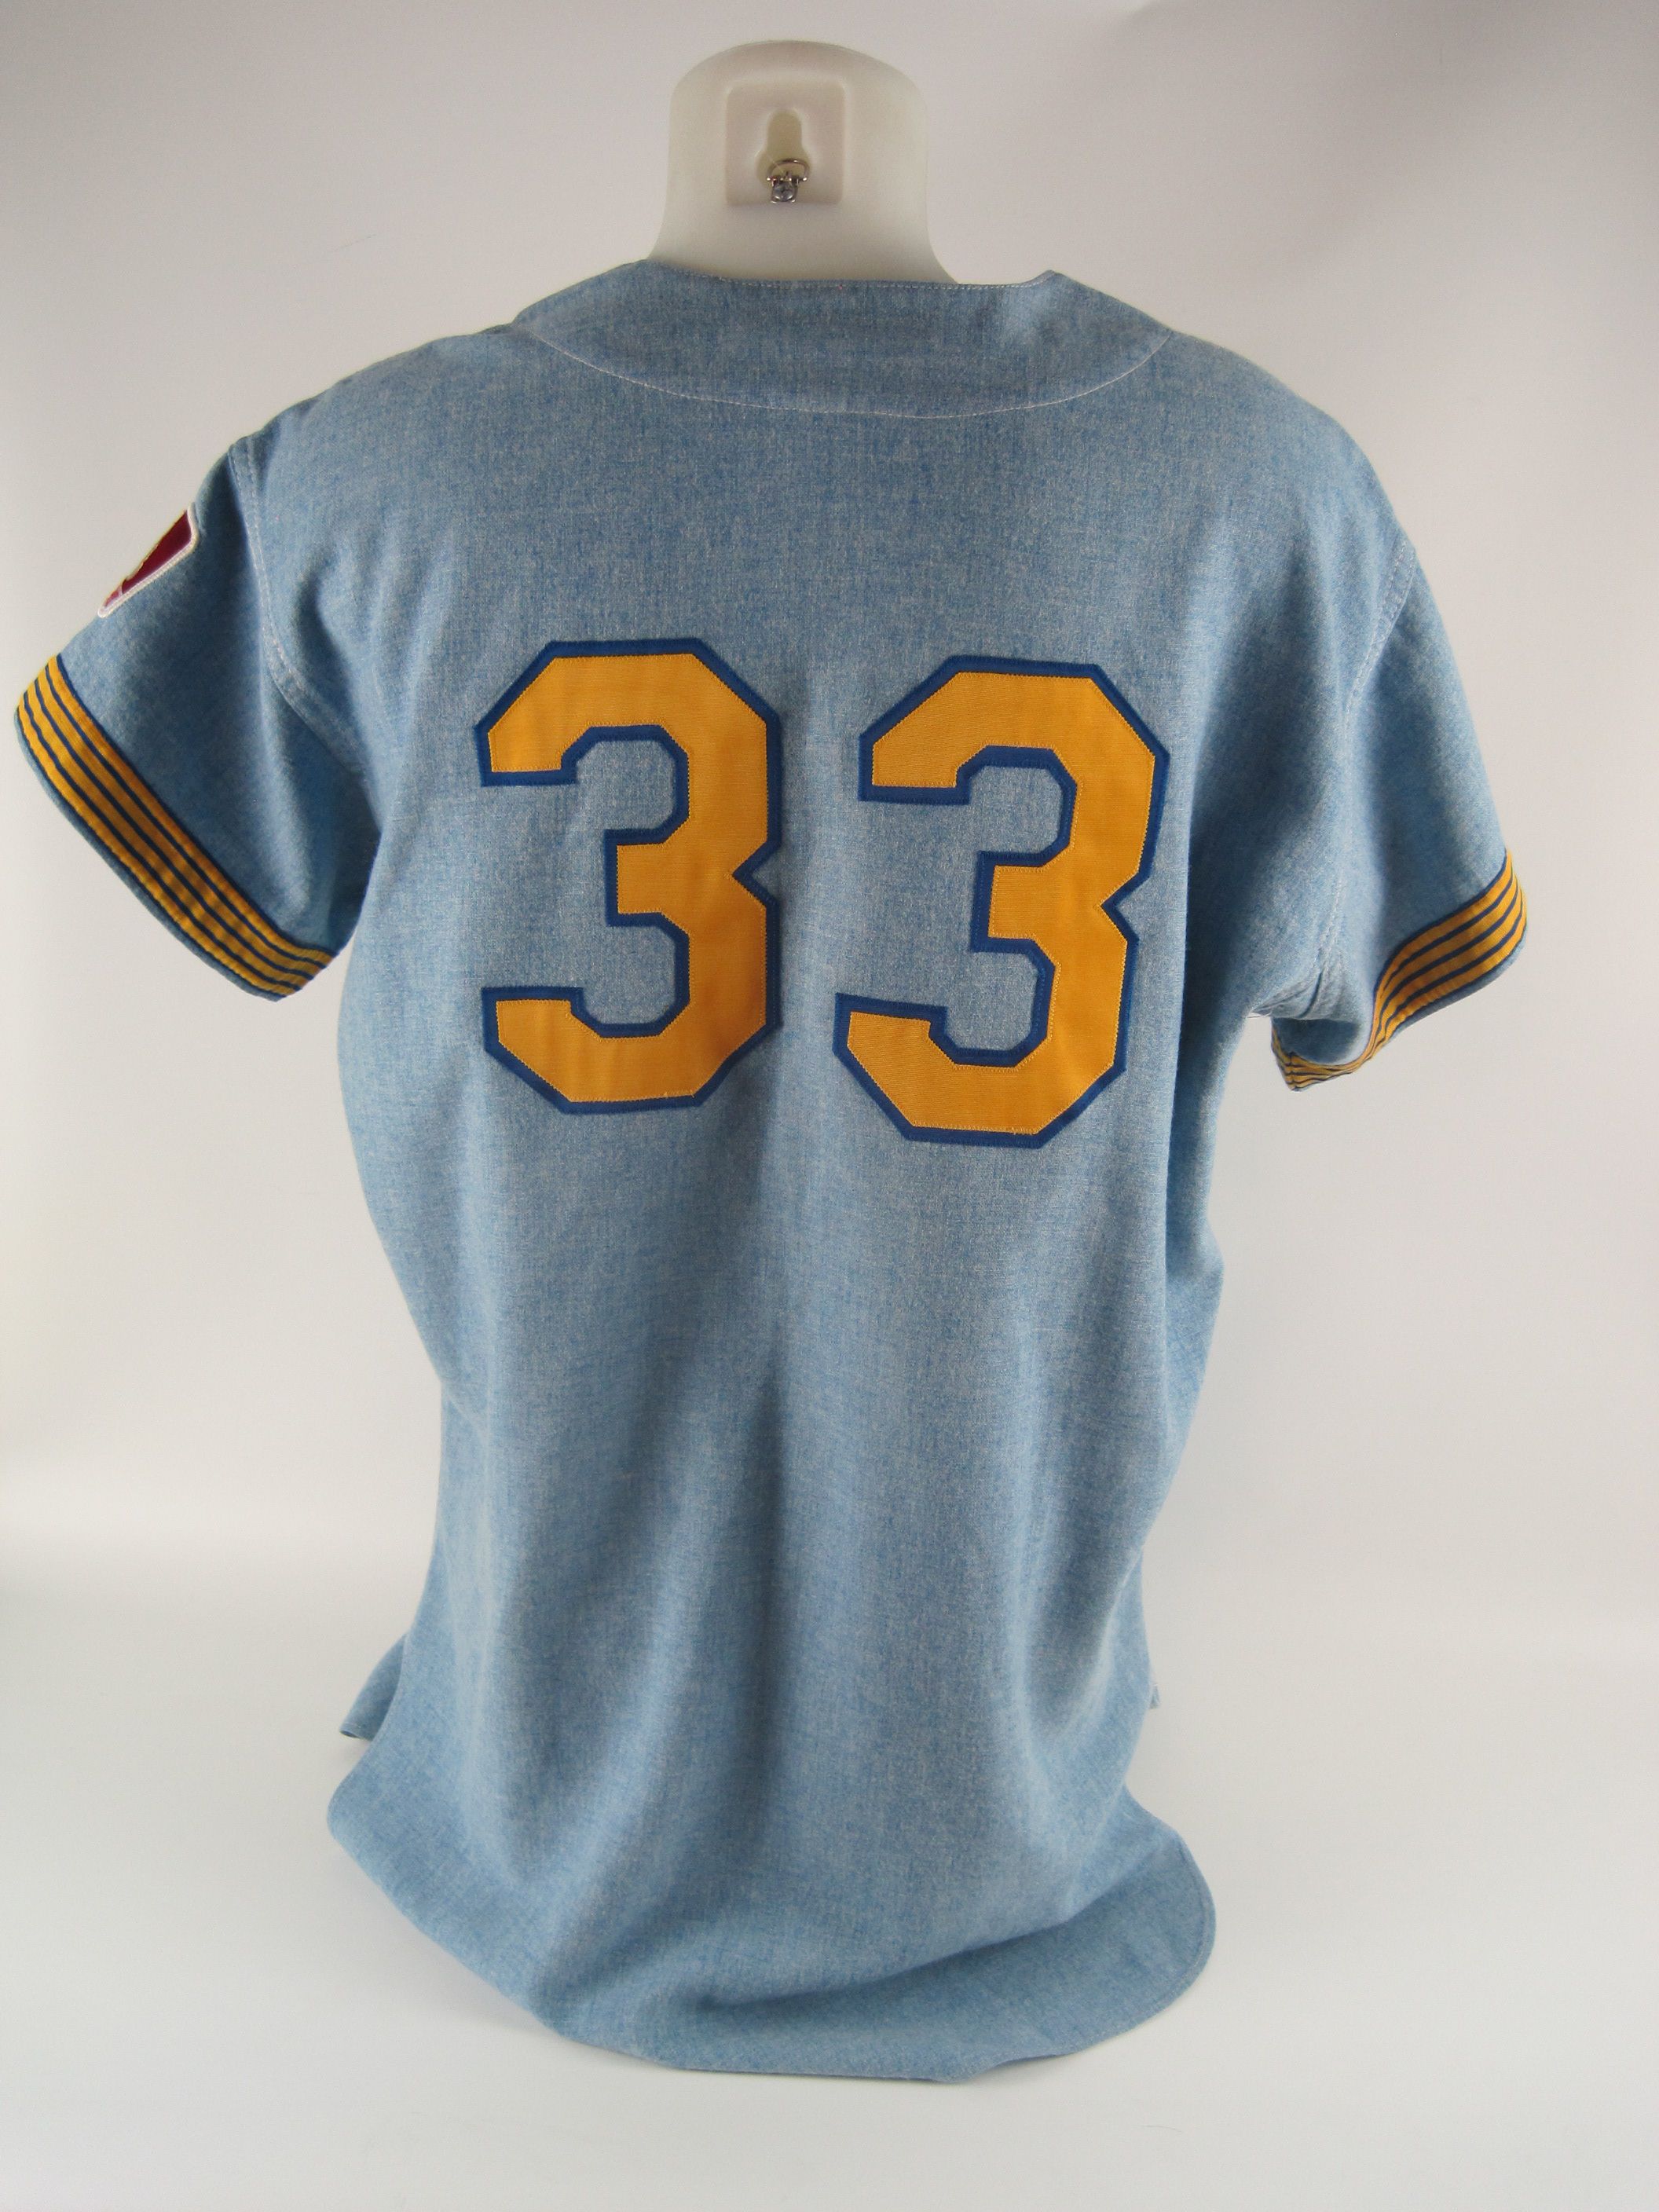 Sicks Stadium 1969 Baseball TRI-BLEND Tee Shirt - Seattle Pilots